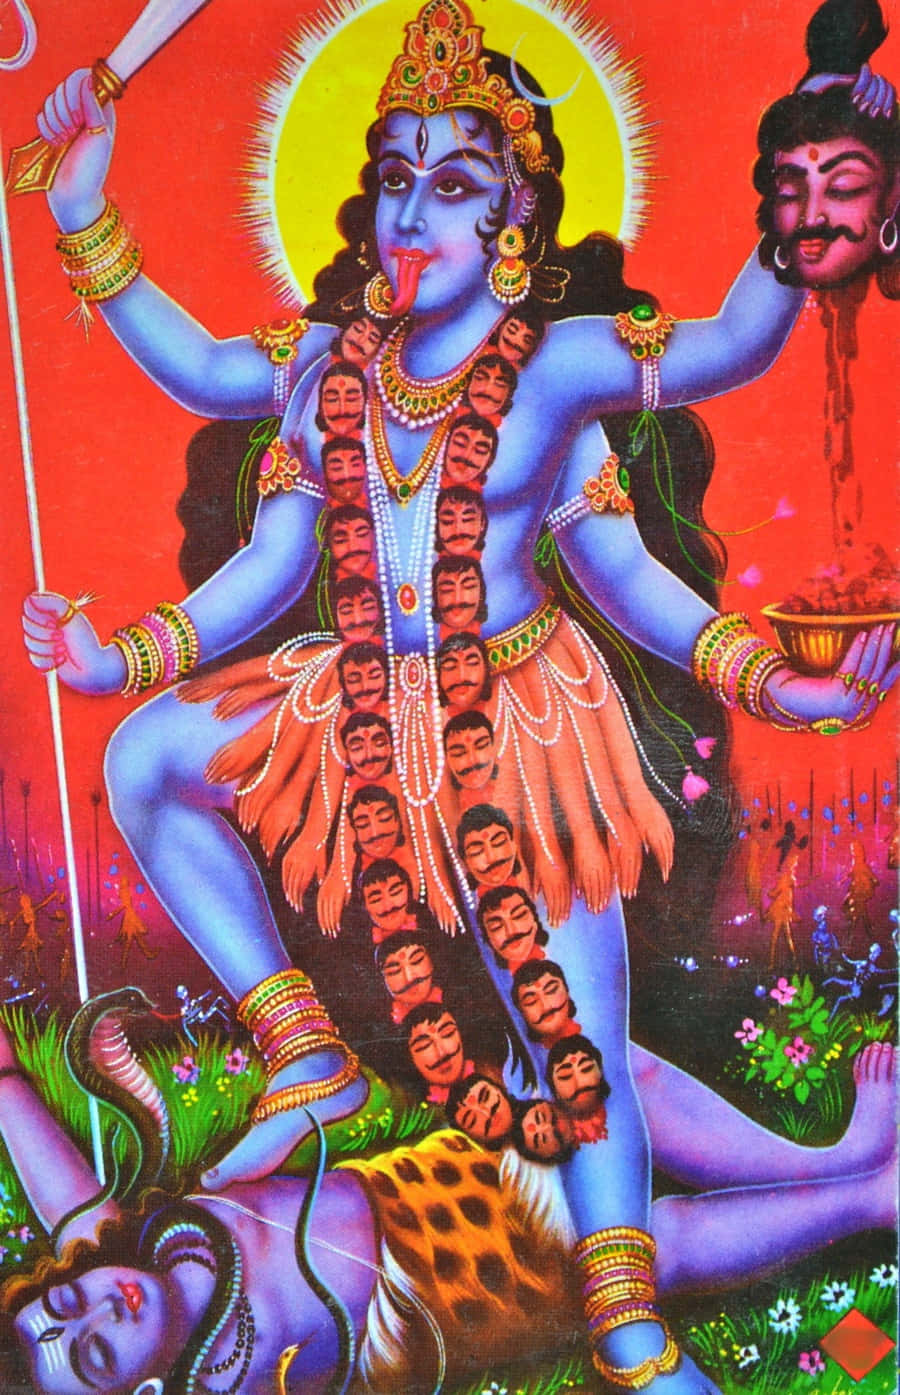 Bildav Hindugudinnan Kali.